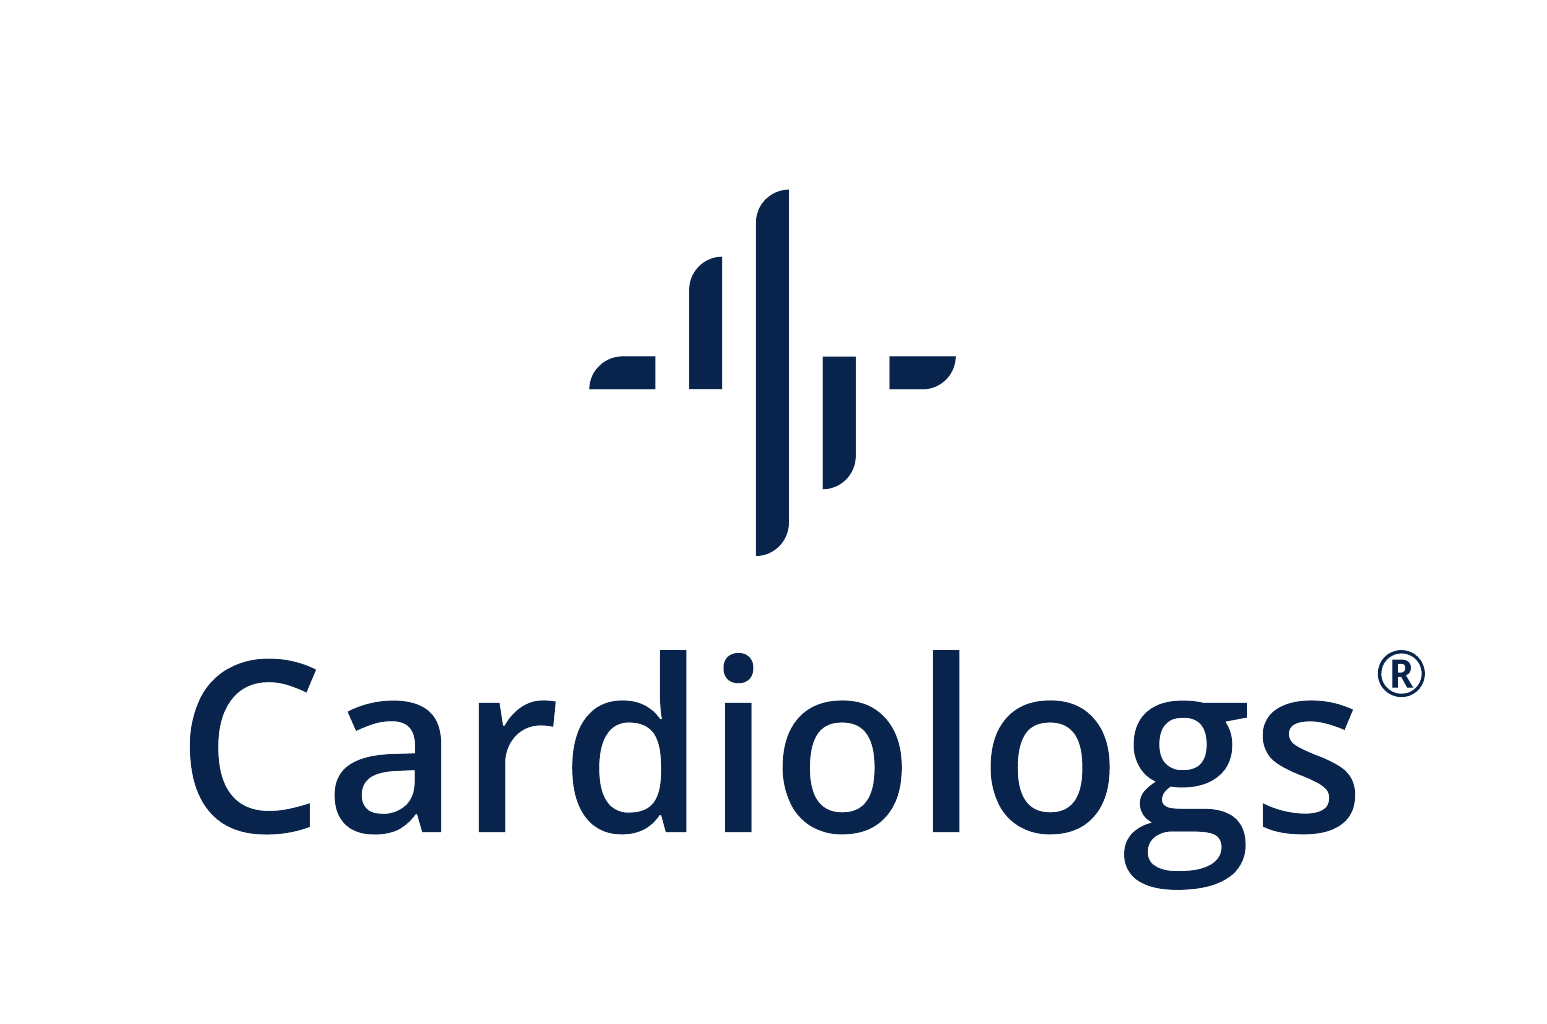 Cardiologs logo